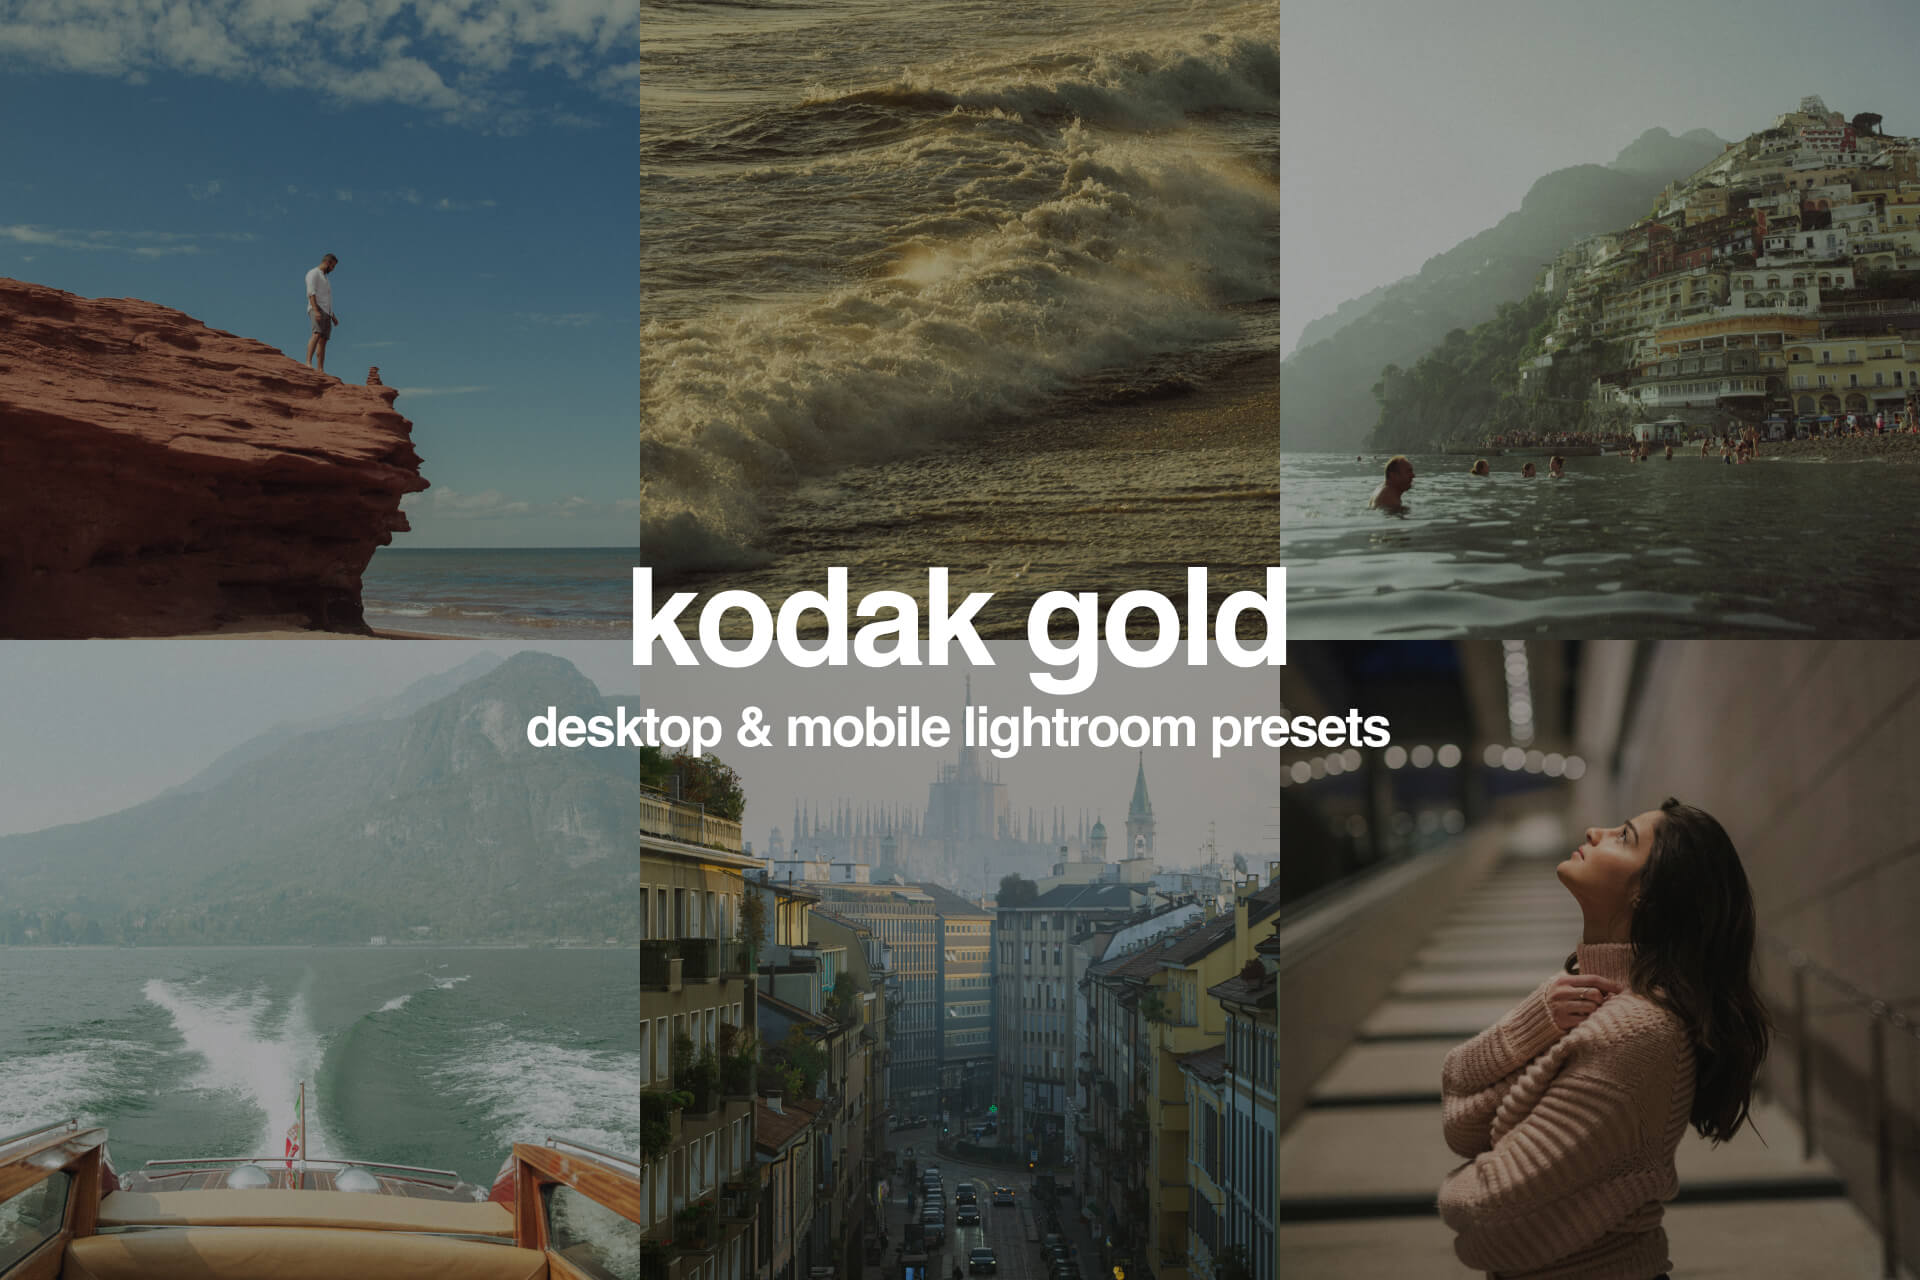 The Ultimate Kodak Gold Lightroom Preset Pack